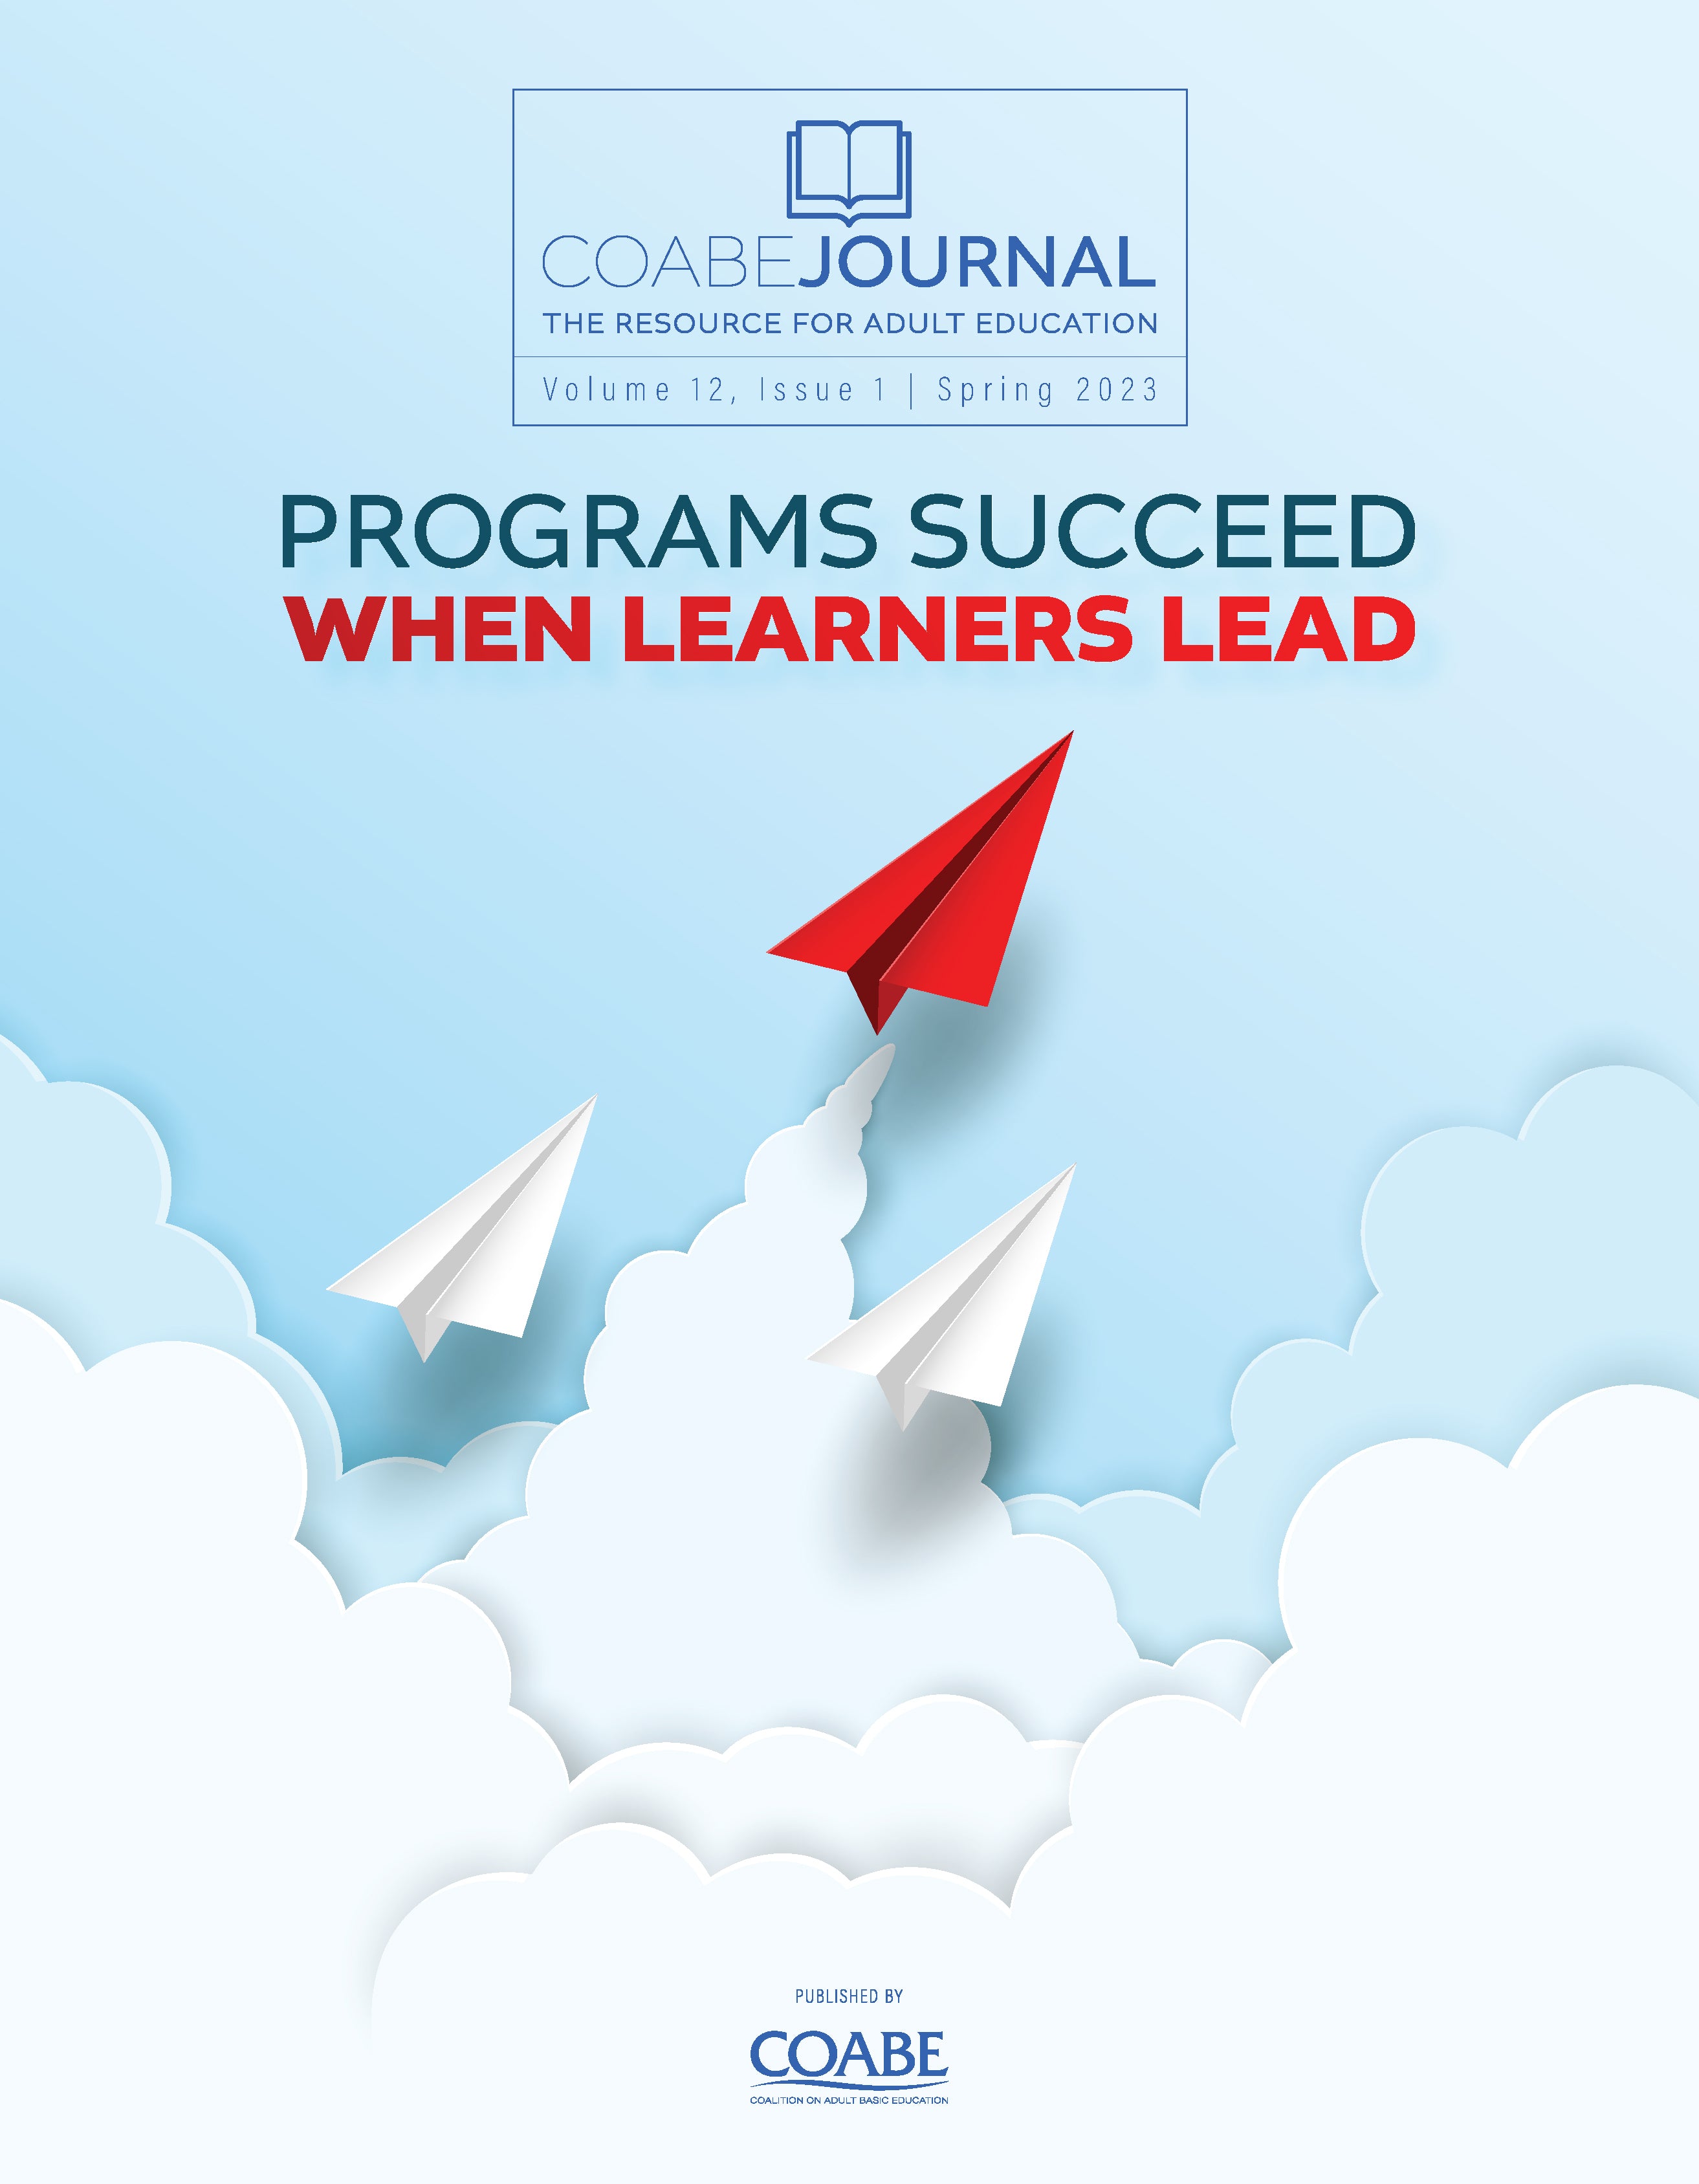 COABE Journal: Programs Succeed When Learners Lead